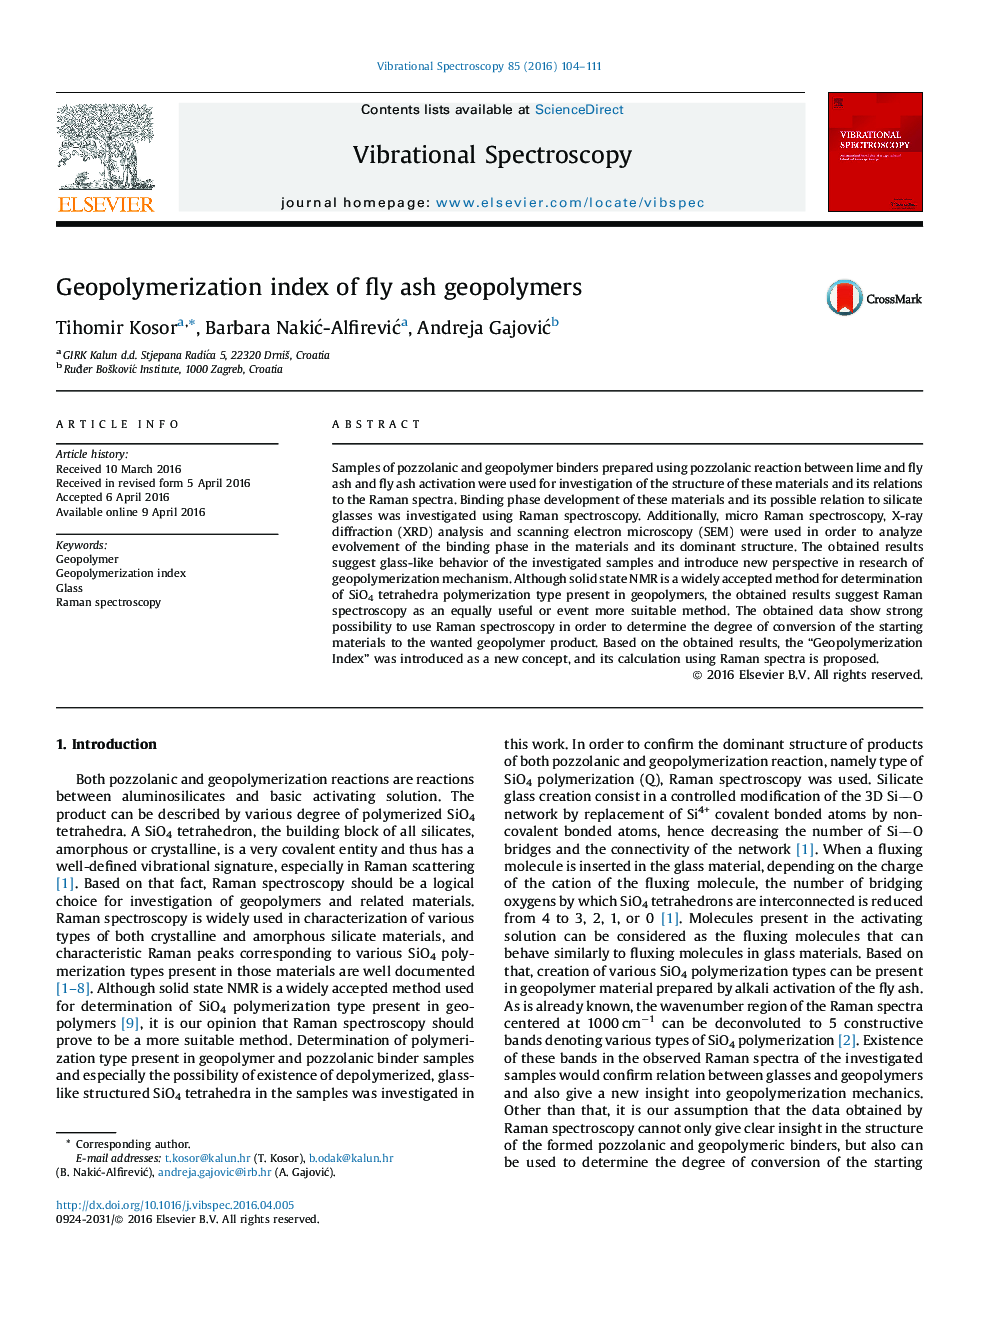 Geopolymerization index of fly ash geopolymers